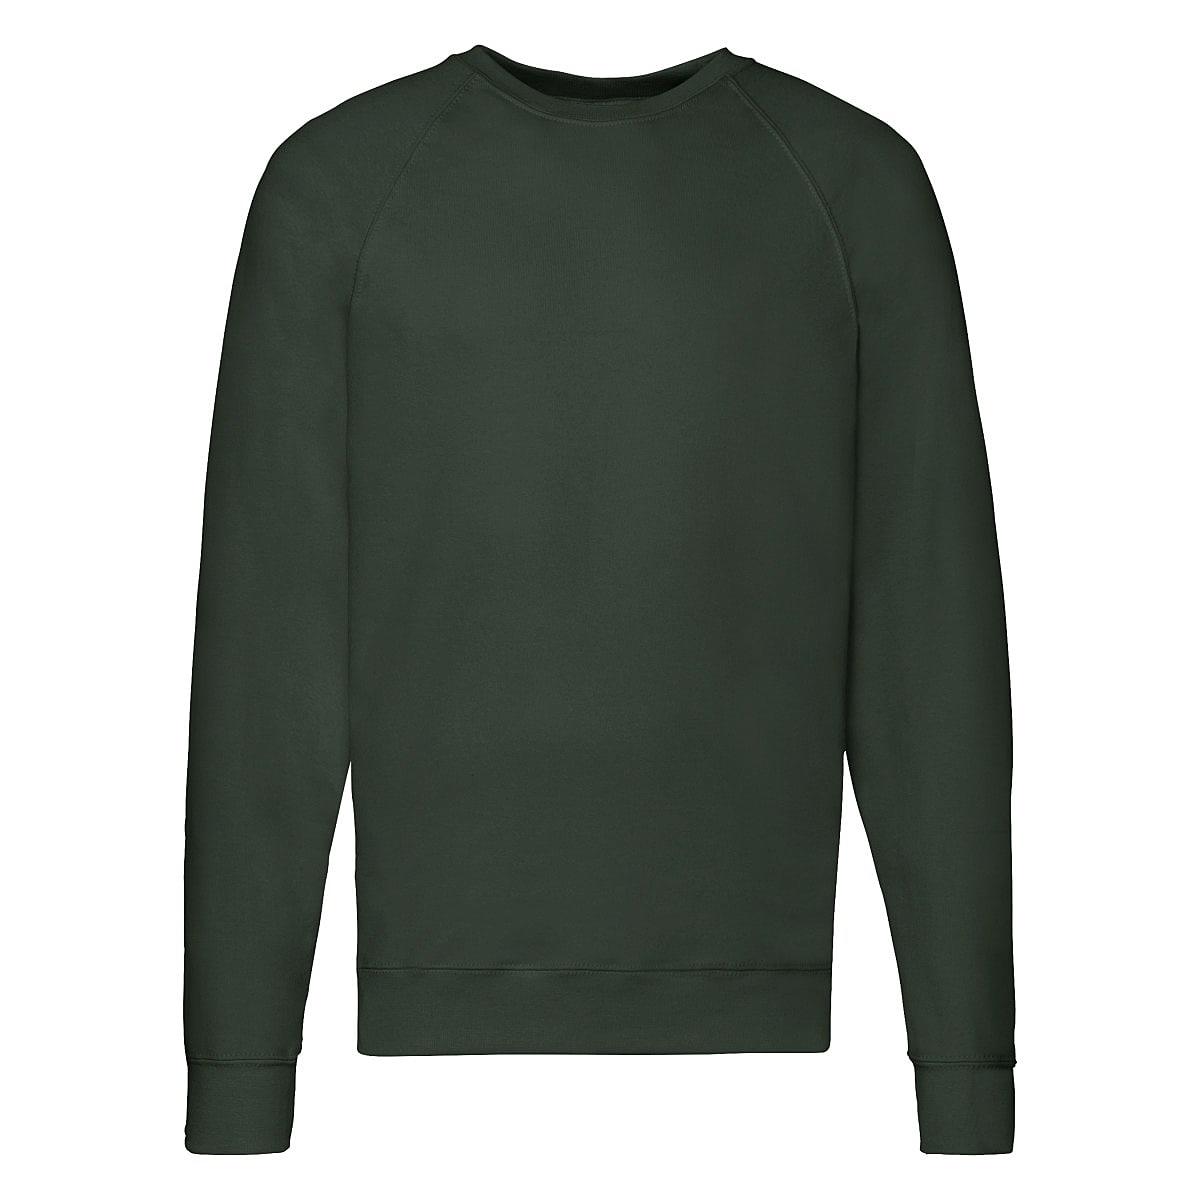 Fruit Of The Loom Mens Lightweight Raglan Sweater in Bottle Green (Product Code: 62138)